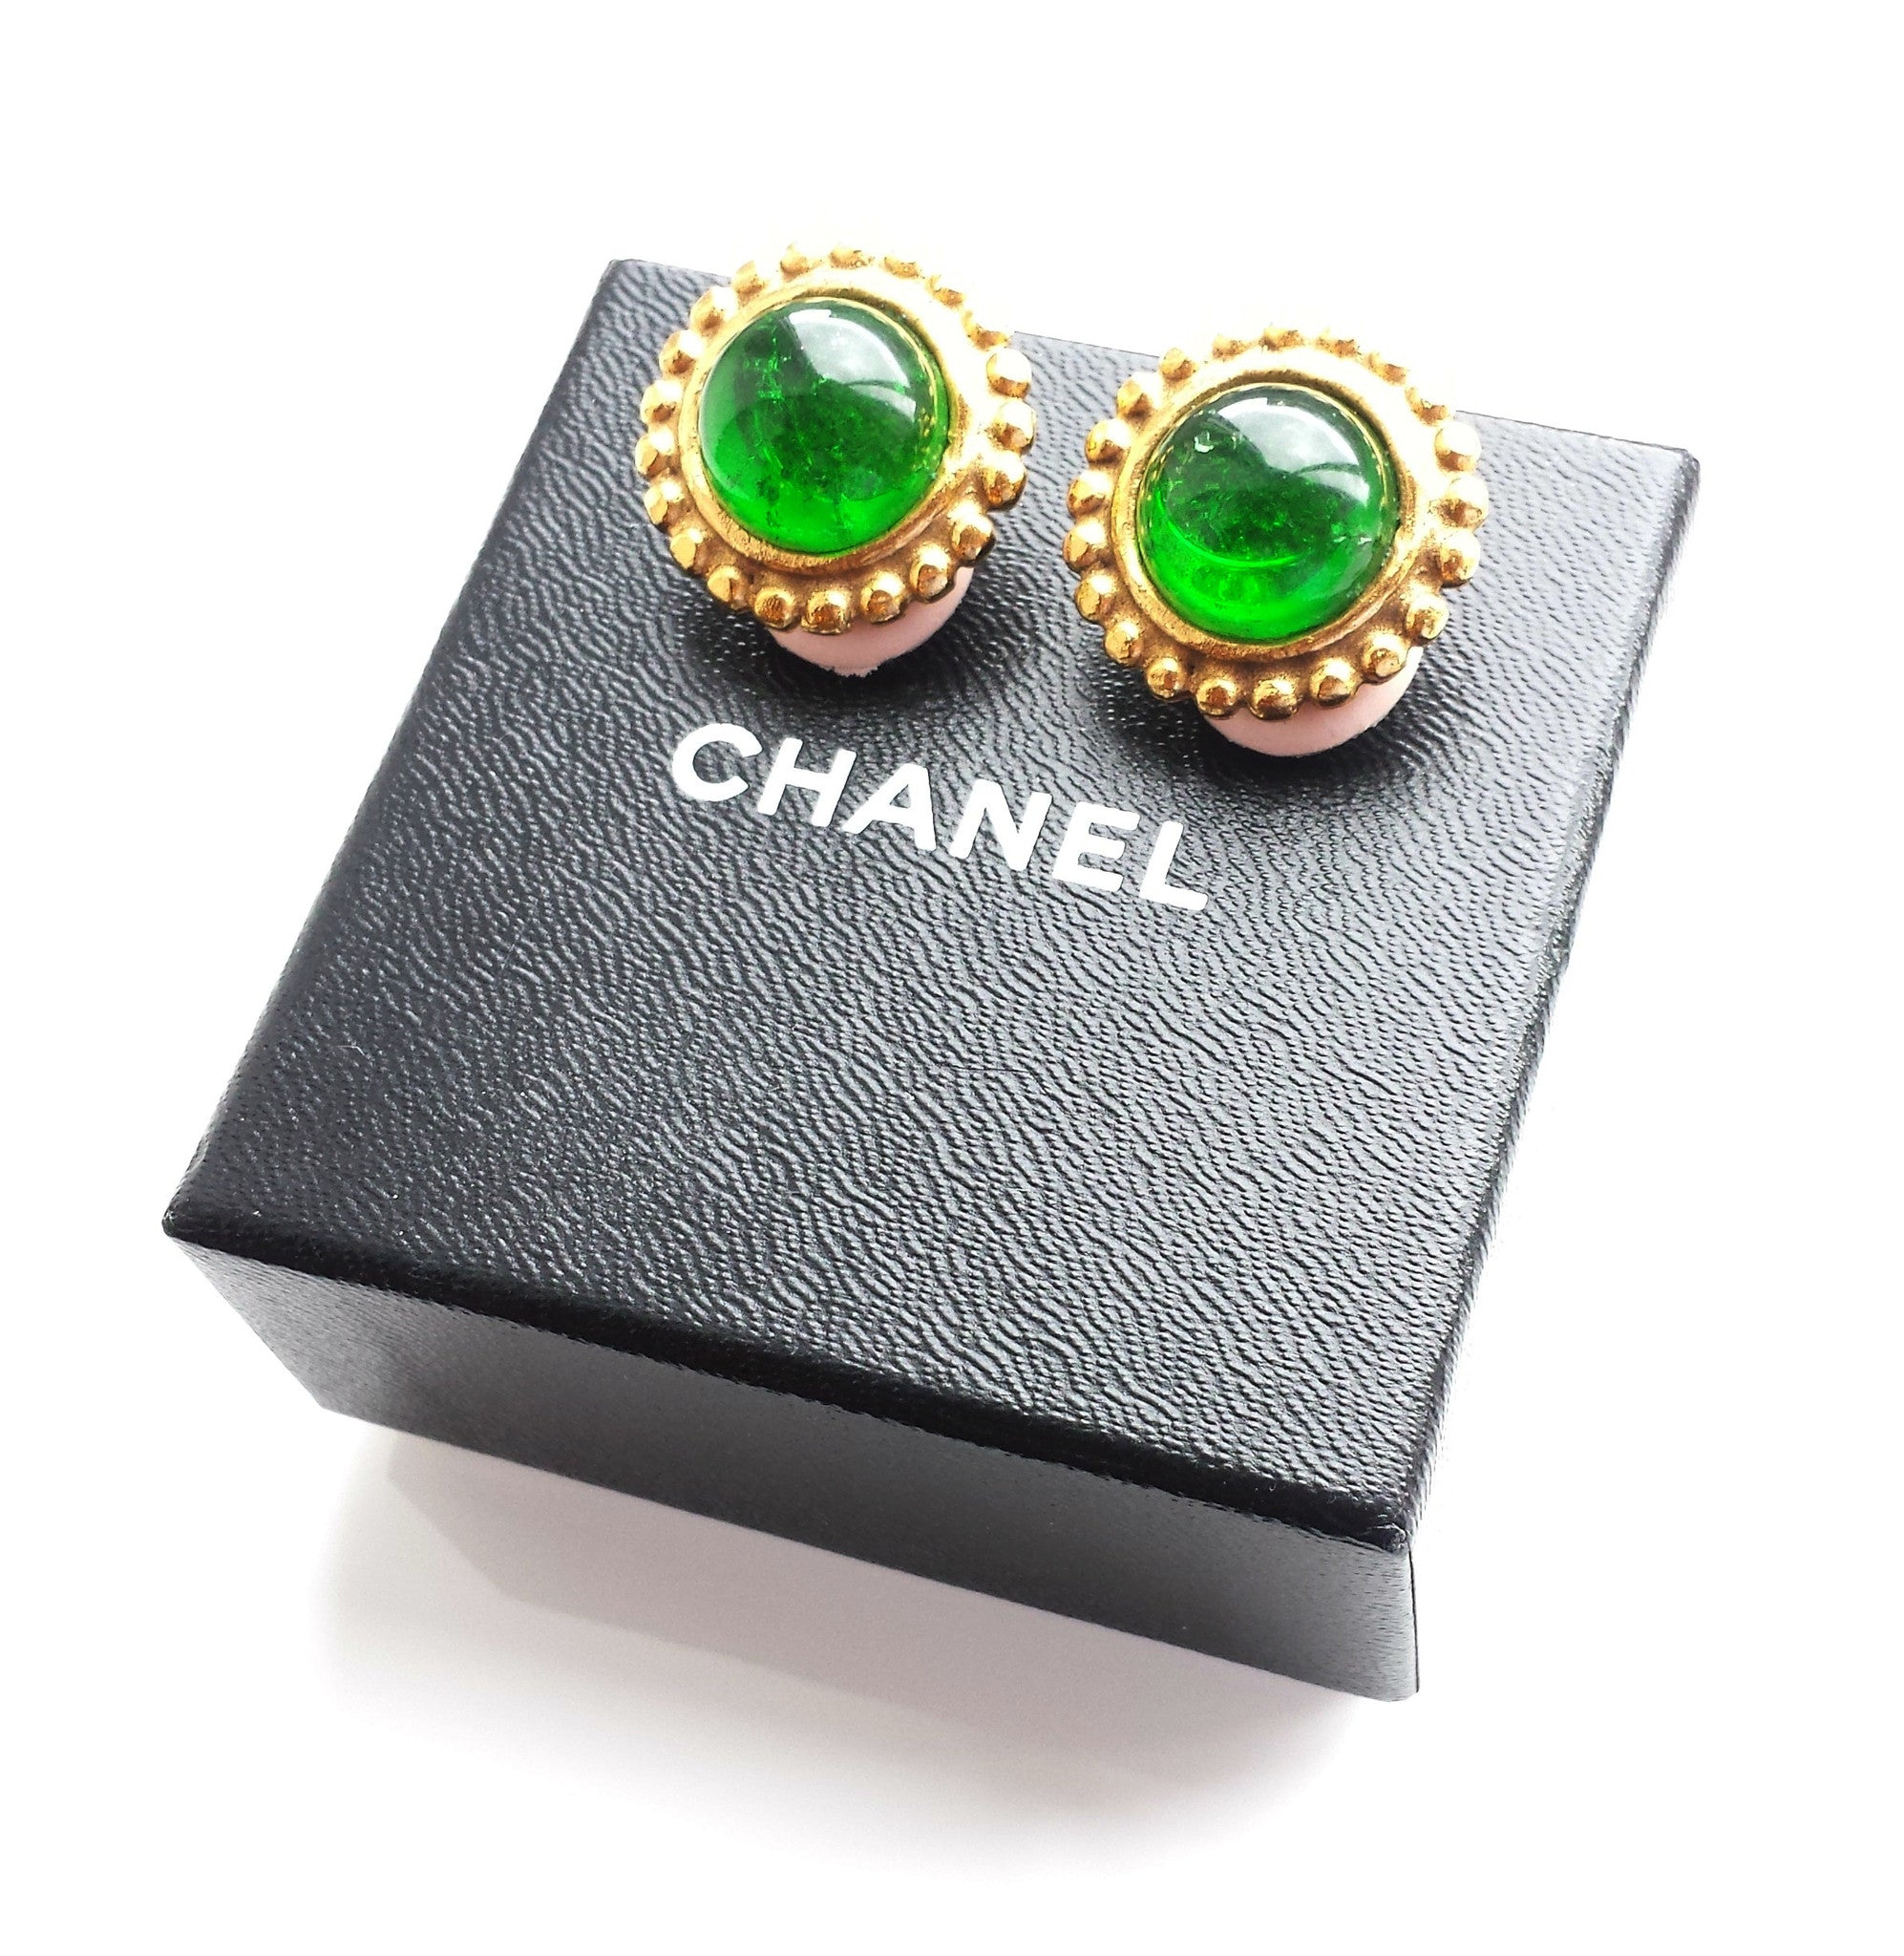 SOLD Chanel Gripoix Pearl & Rhinestone Pink & Green Earrings 1980s – Palm  Beach Vintage